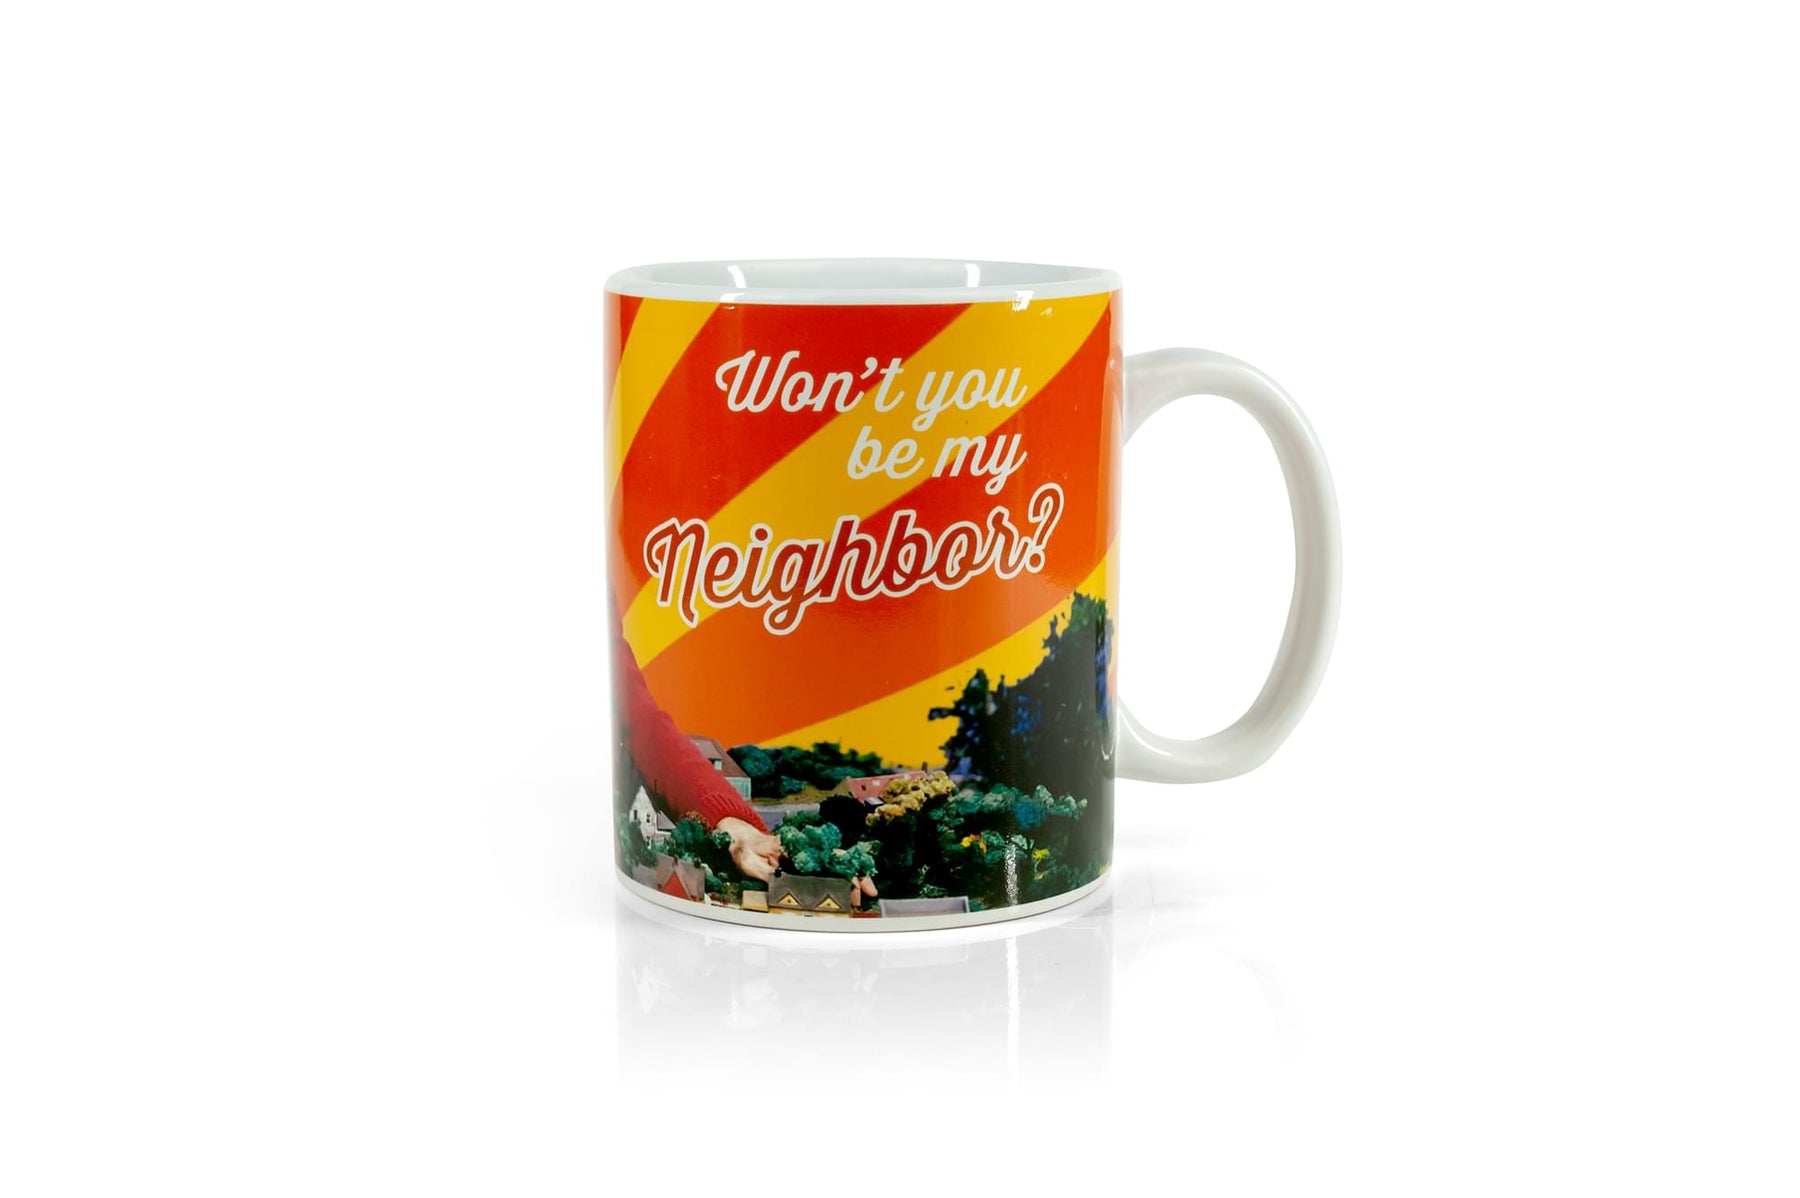 Mister Rogers Neighborhood Mug | Won't You Be My Neighbor | Holds 15 Ounces